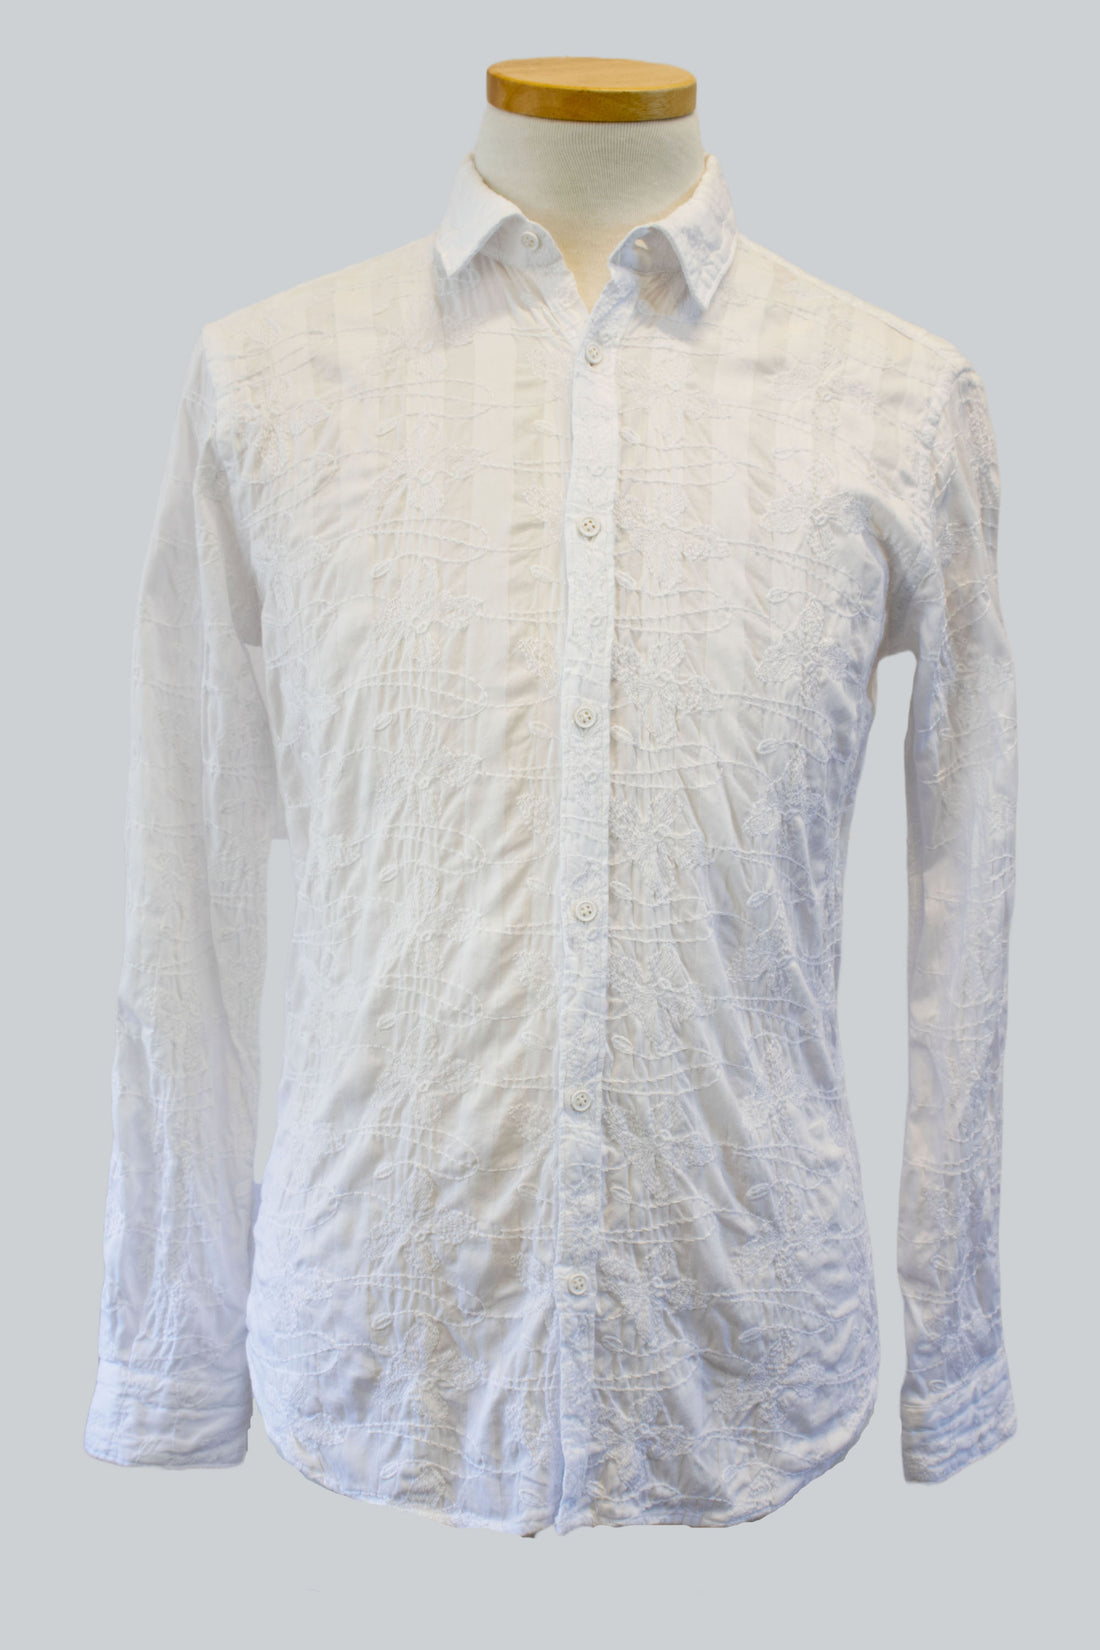 Poggianti L/S Shirt Embroidered | White